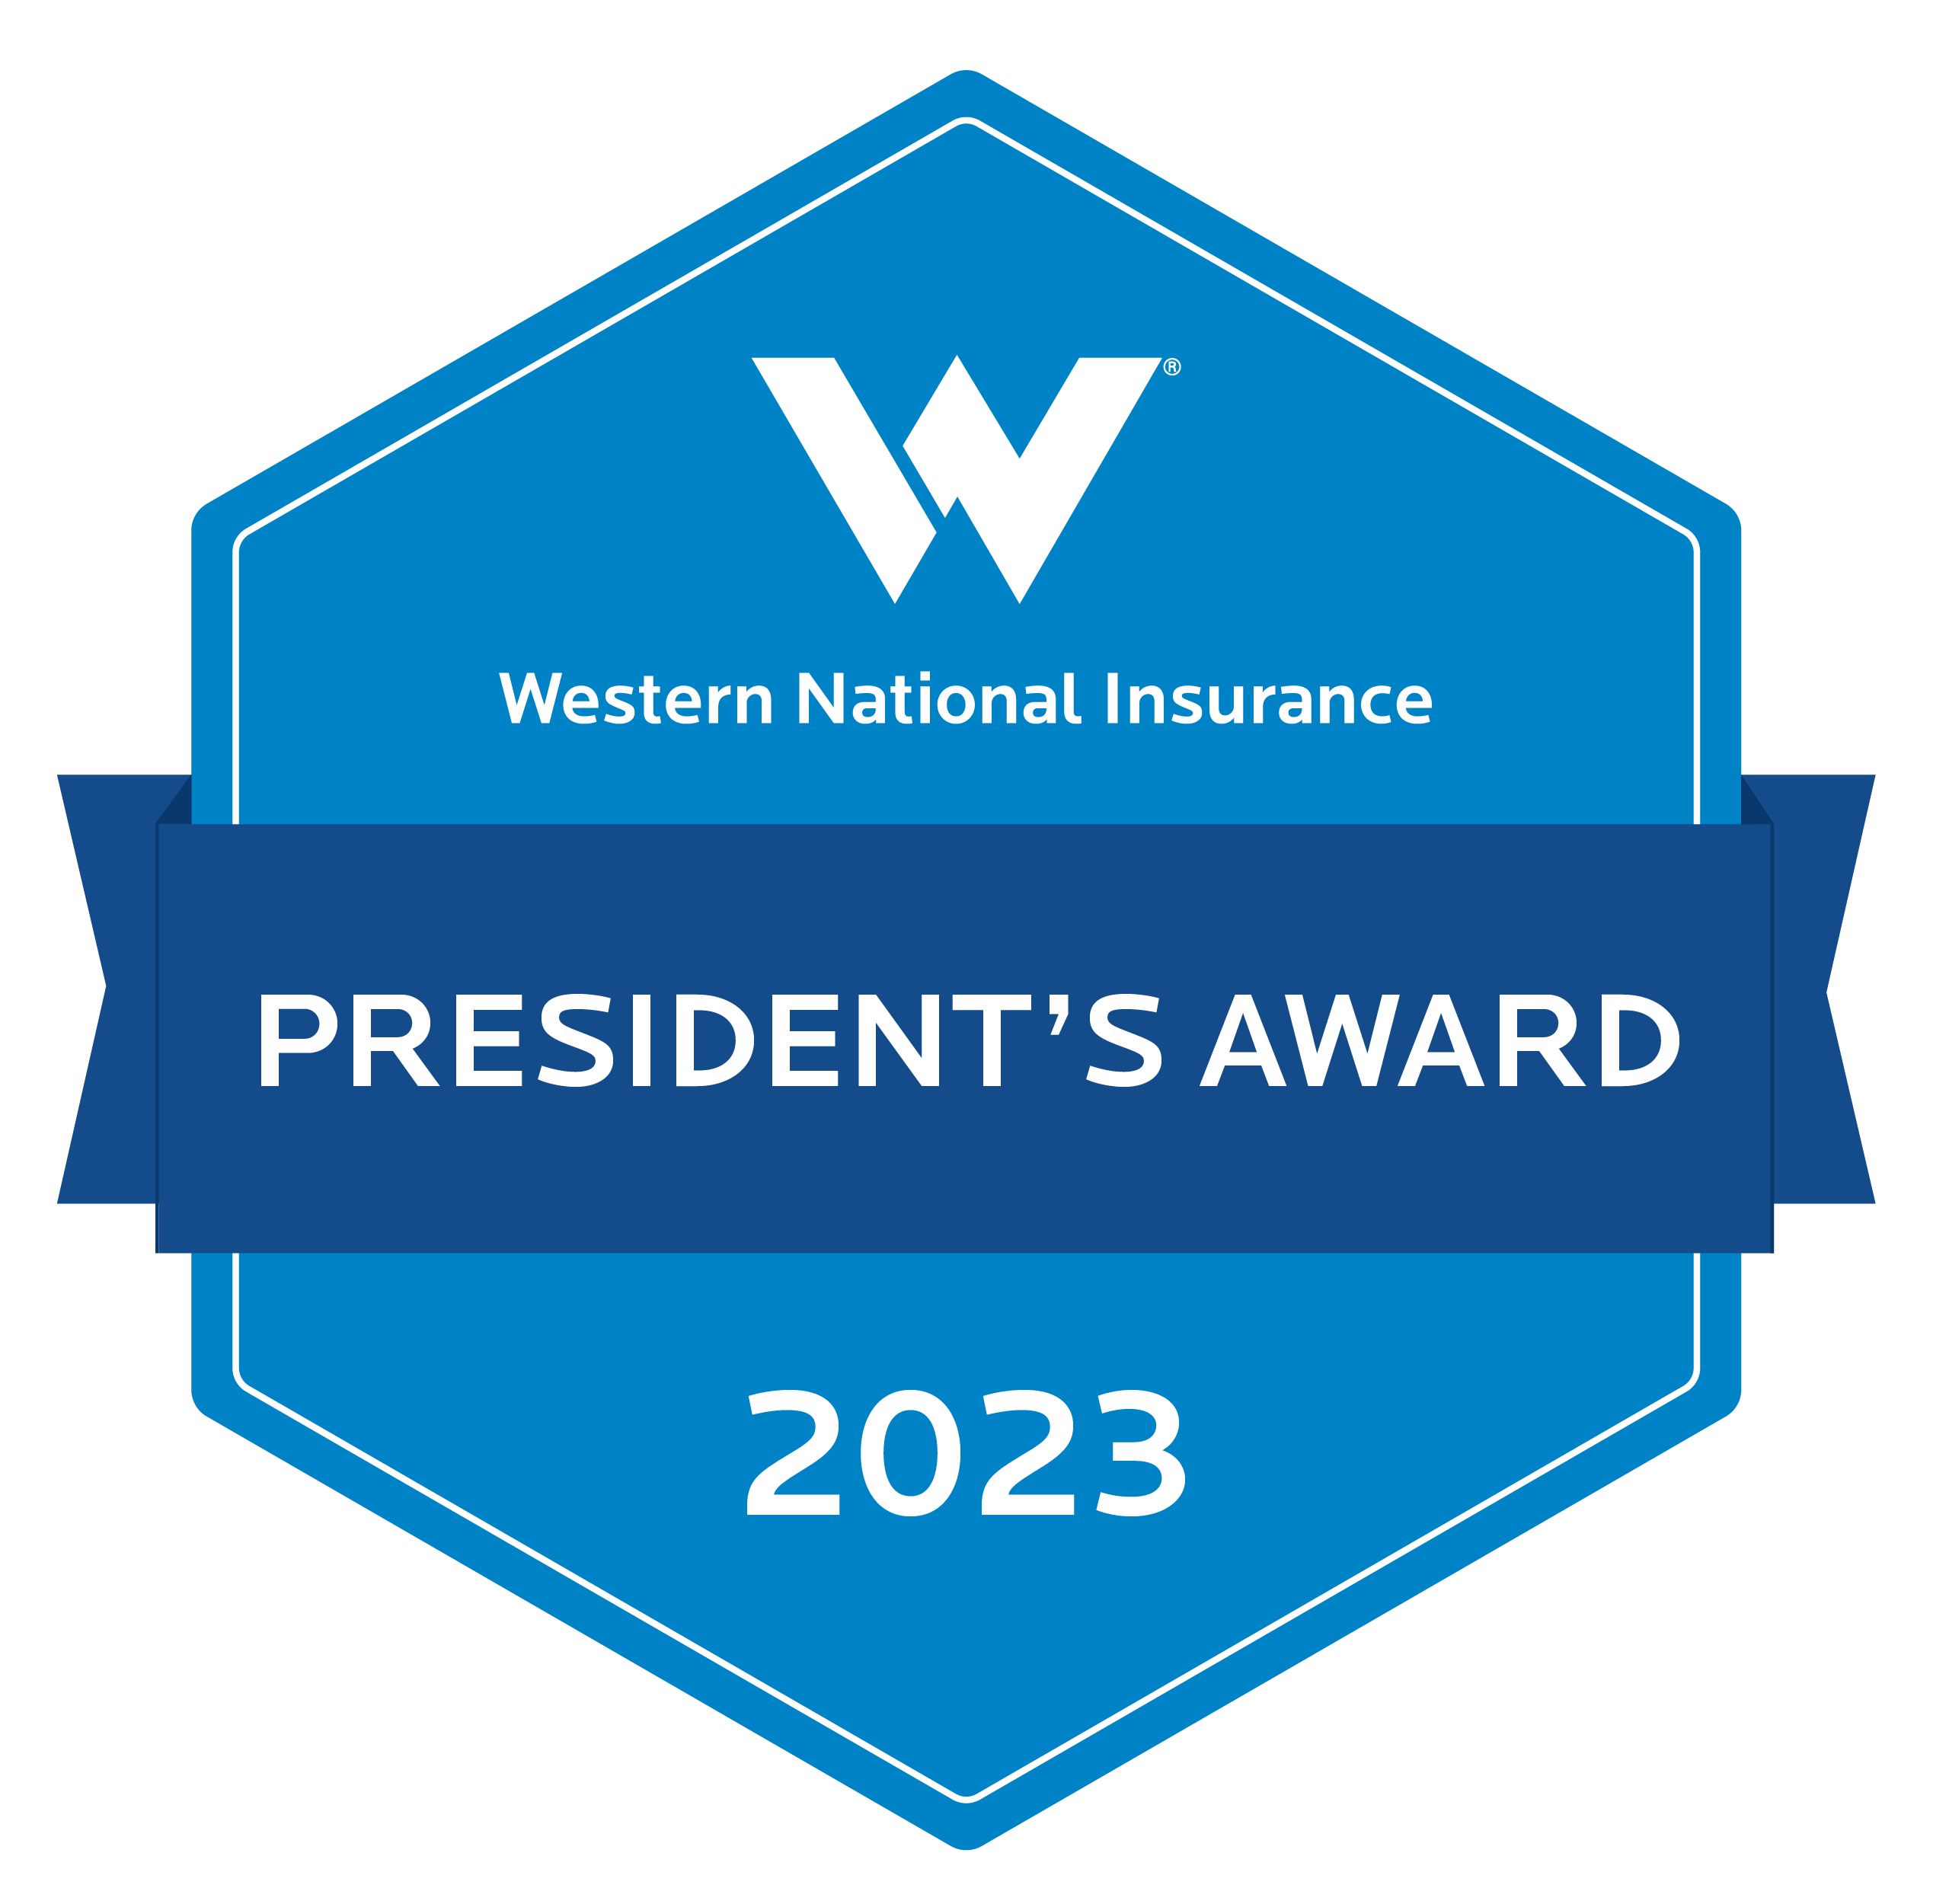 Light blue hexagon with dark blue ribbon that says Western National Insurance President's Award 2023